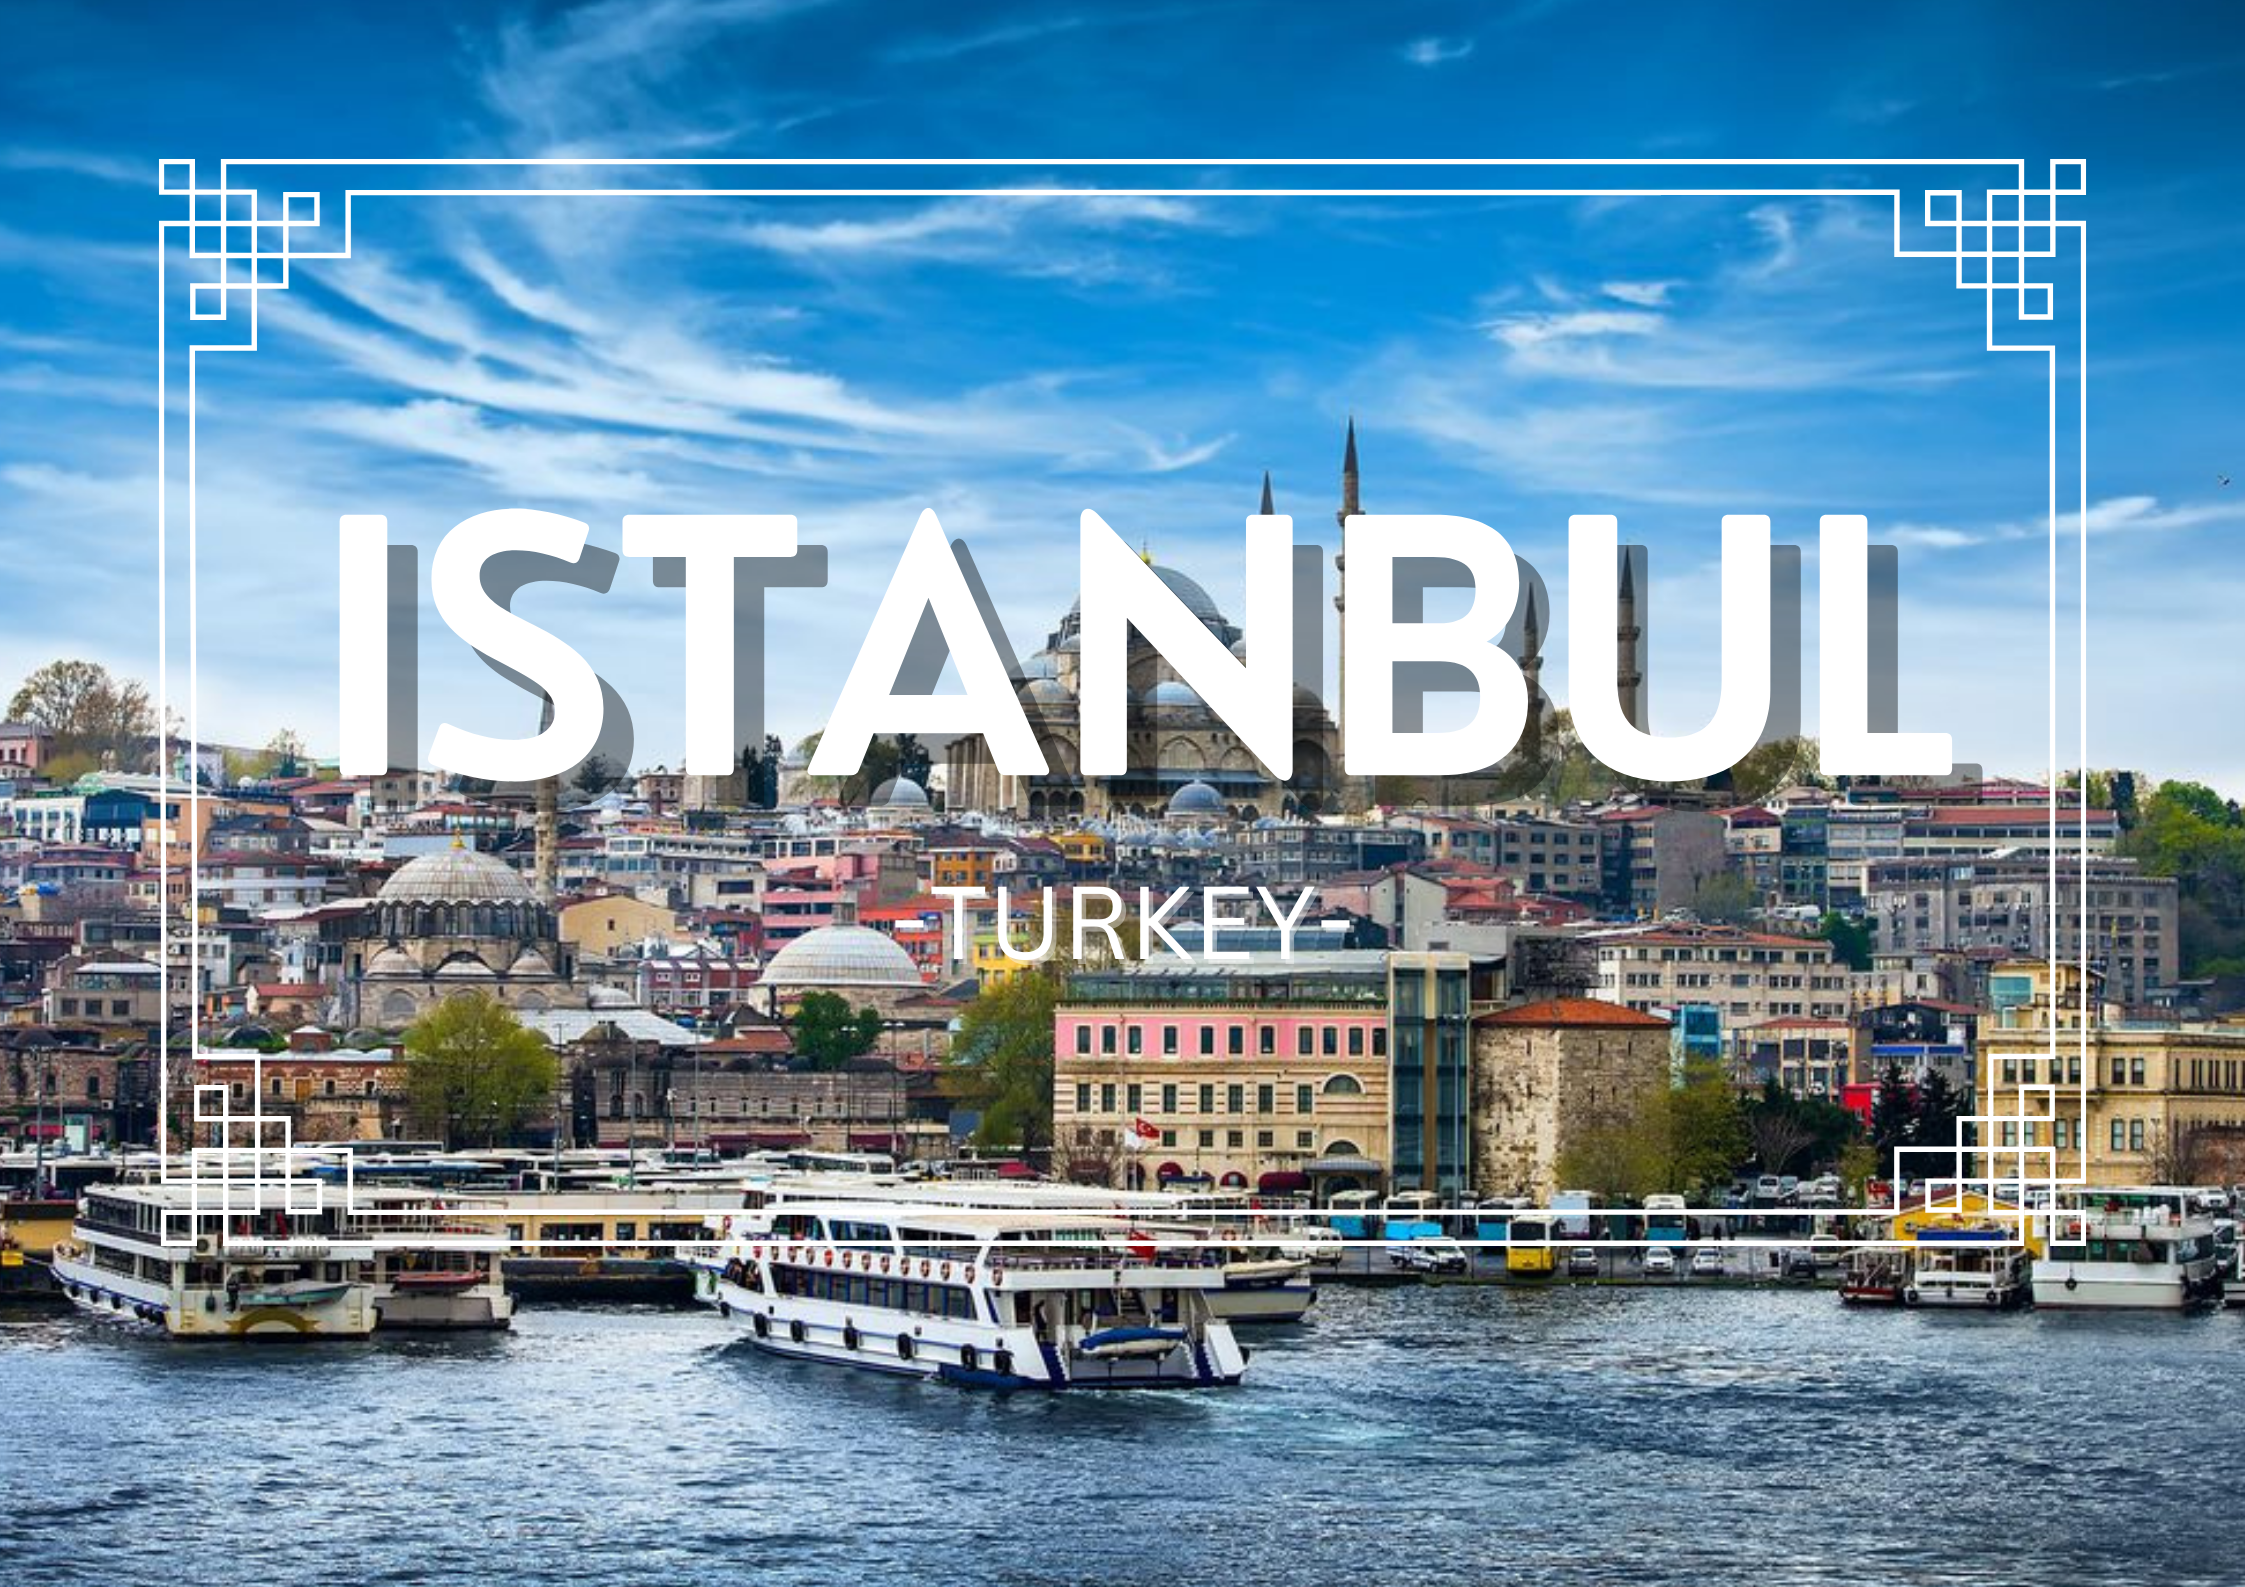 22-26 May 2023 - Istanbul, Turkey